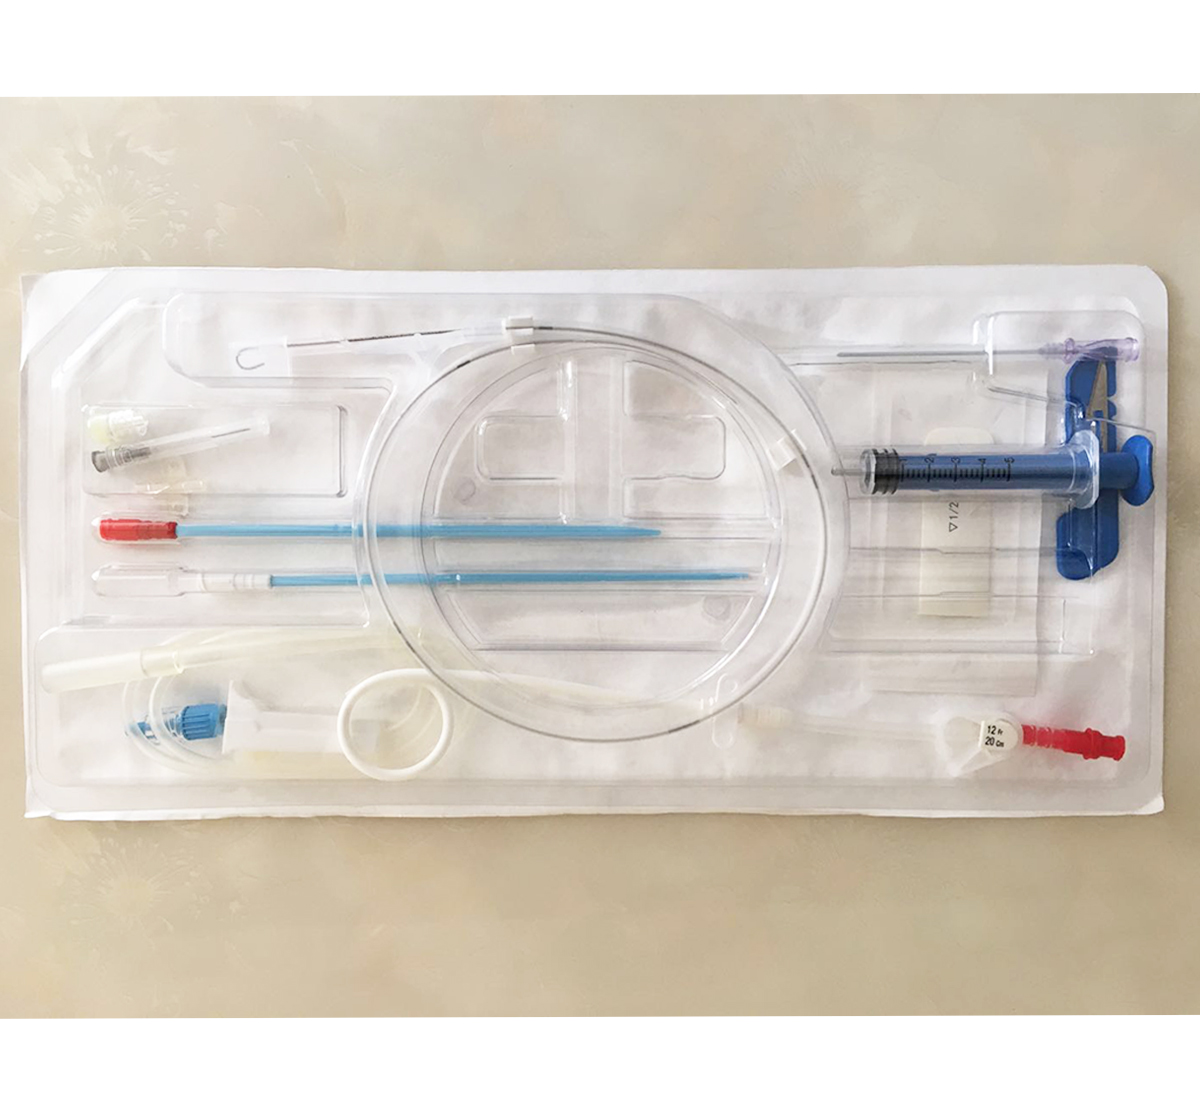 pigtail drainage catheter kit